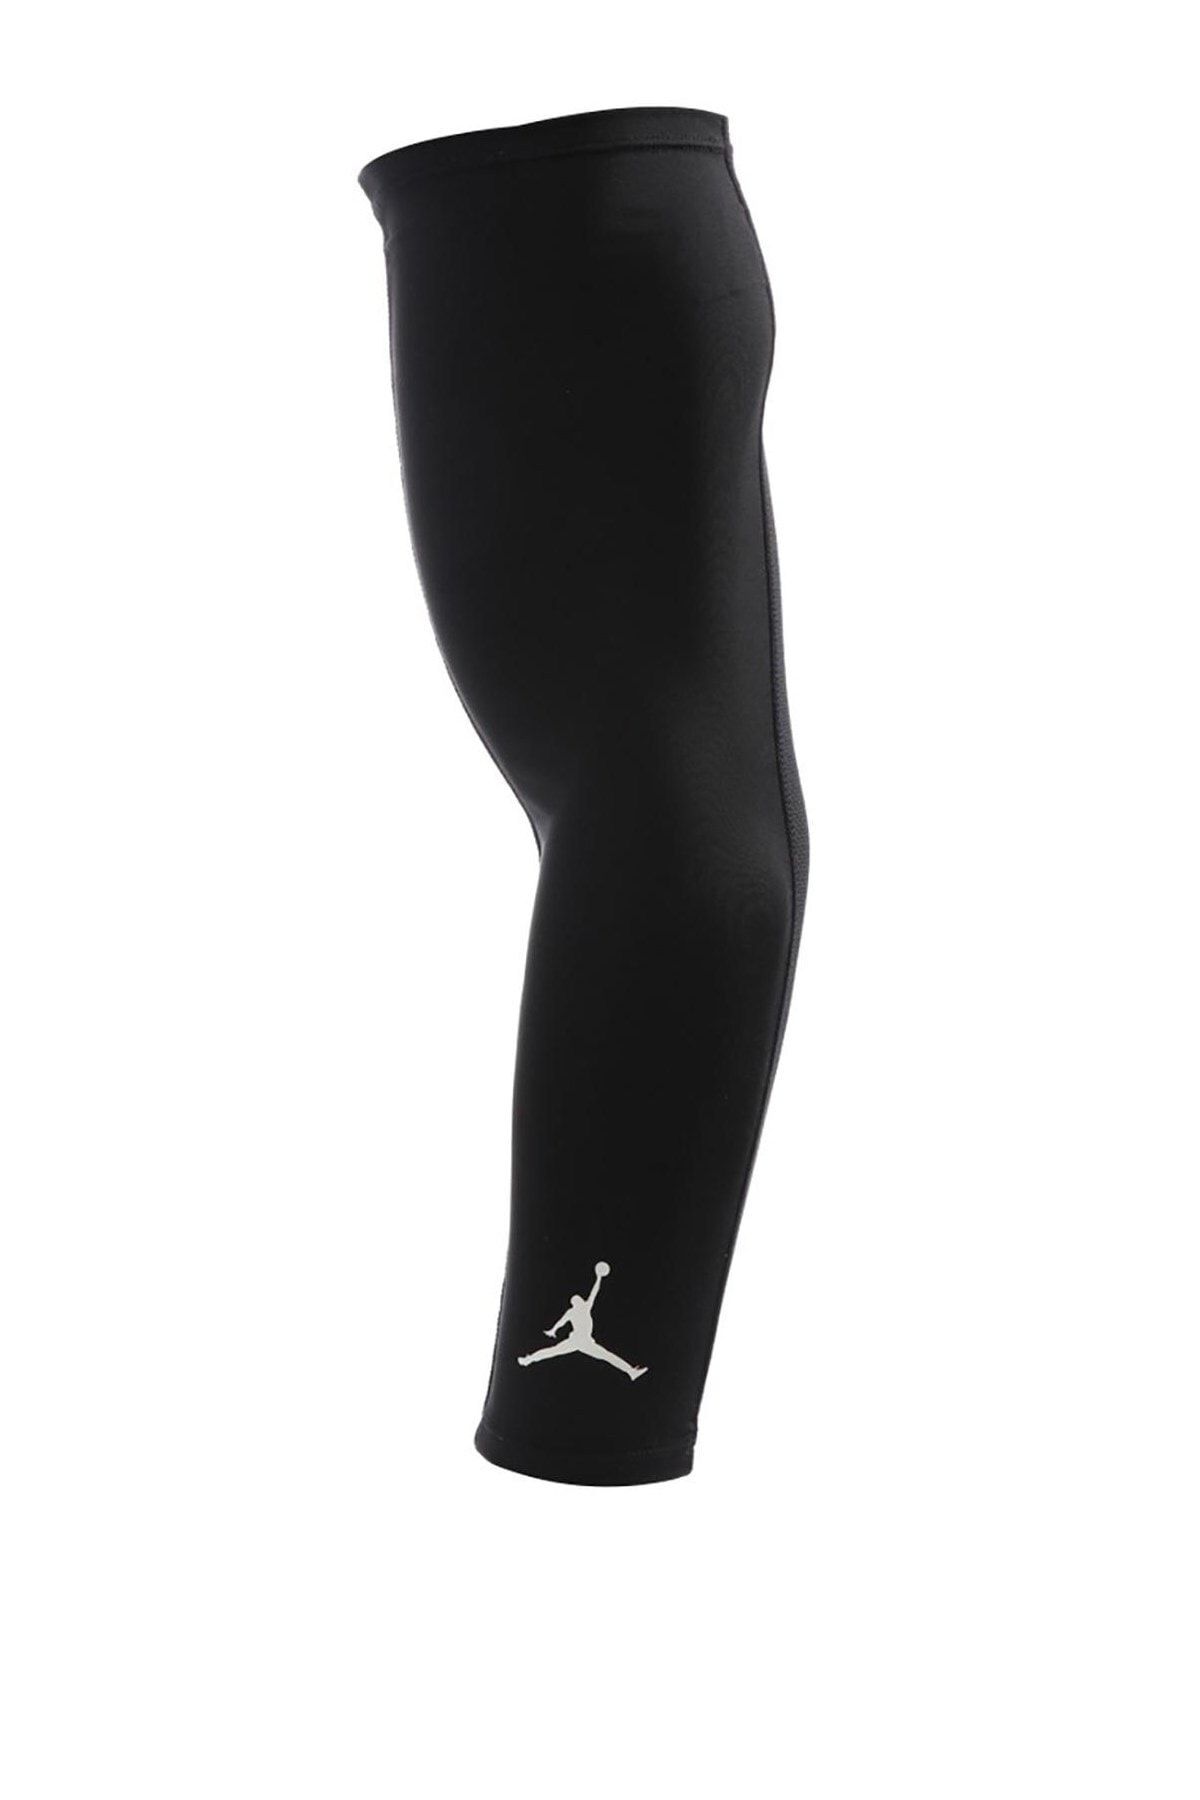 Nike Jordan Shooter Sleeves Basketbol Kolluk J.ks.04.010.lx